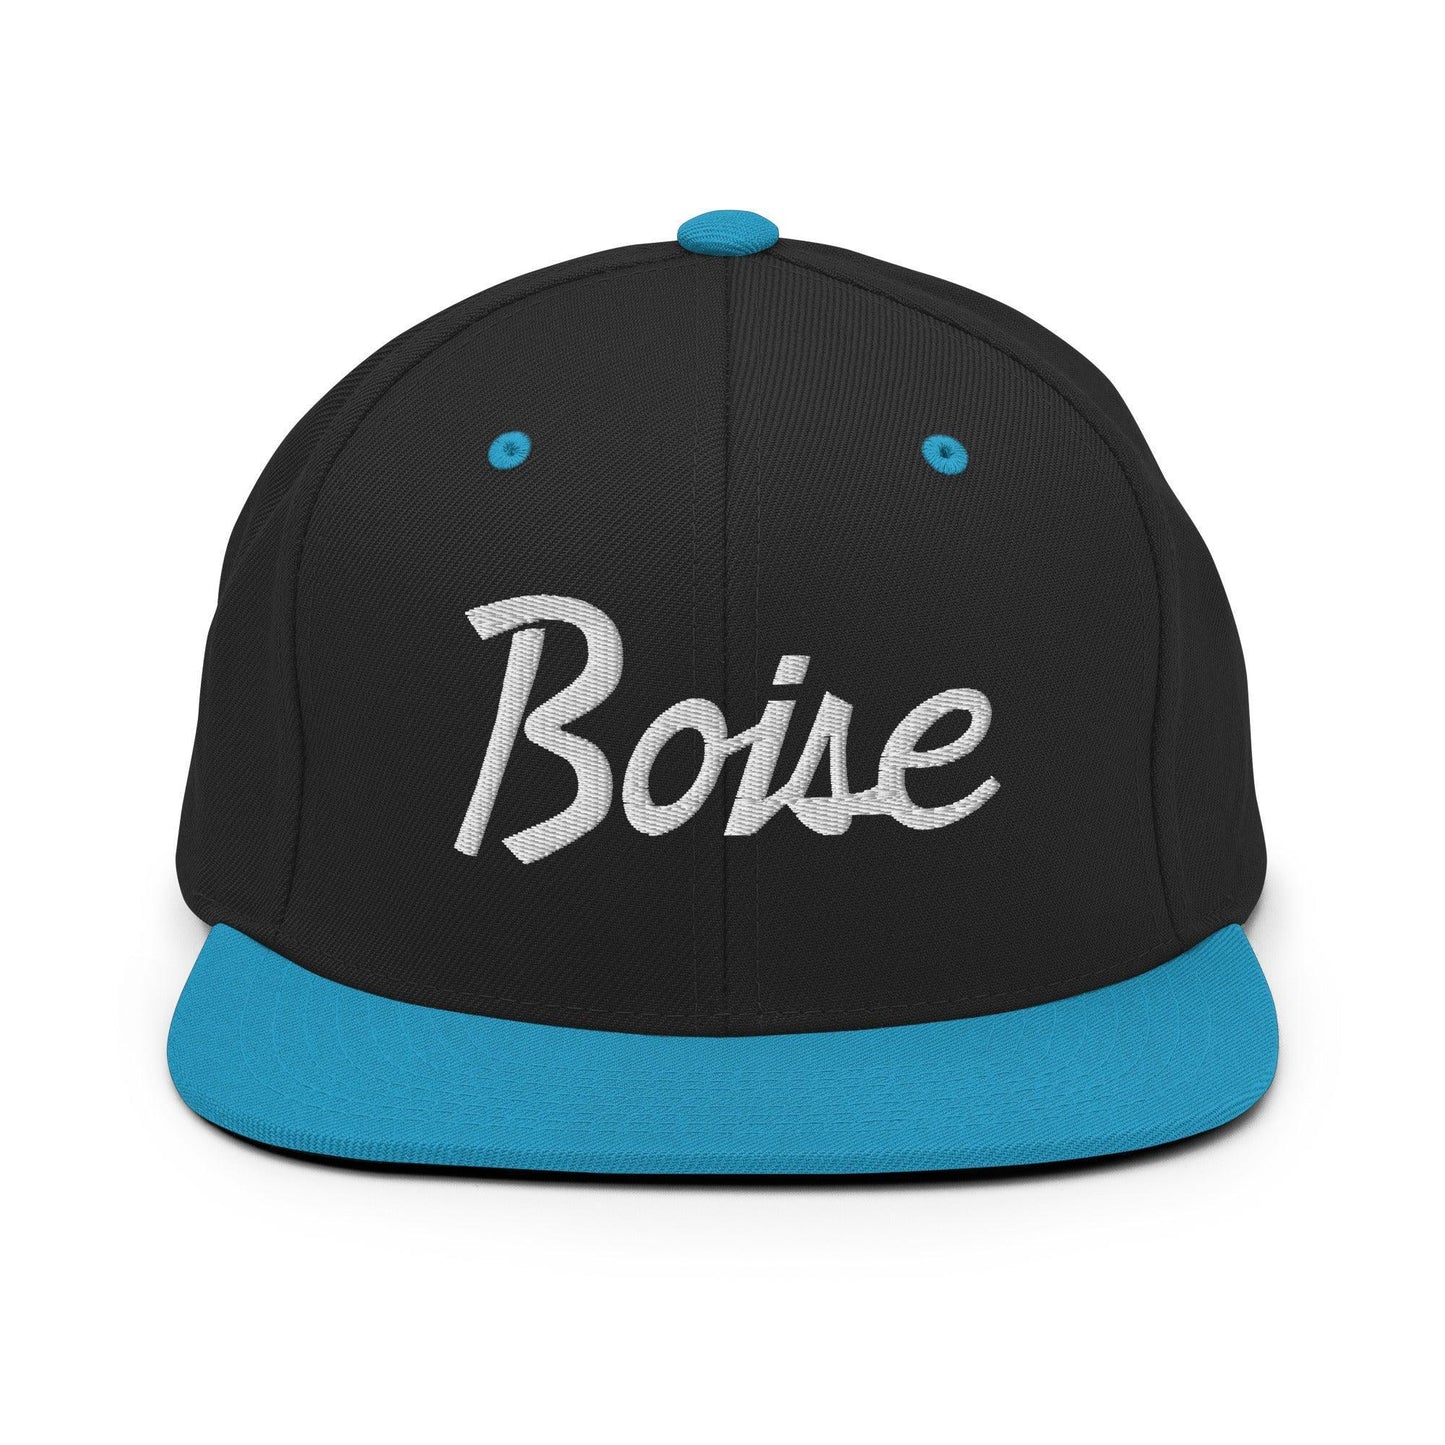 Boise Script Snapback Hat Black Teal